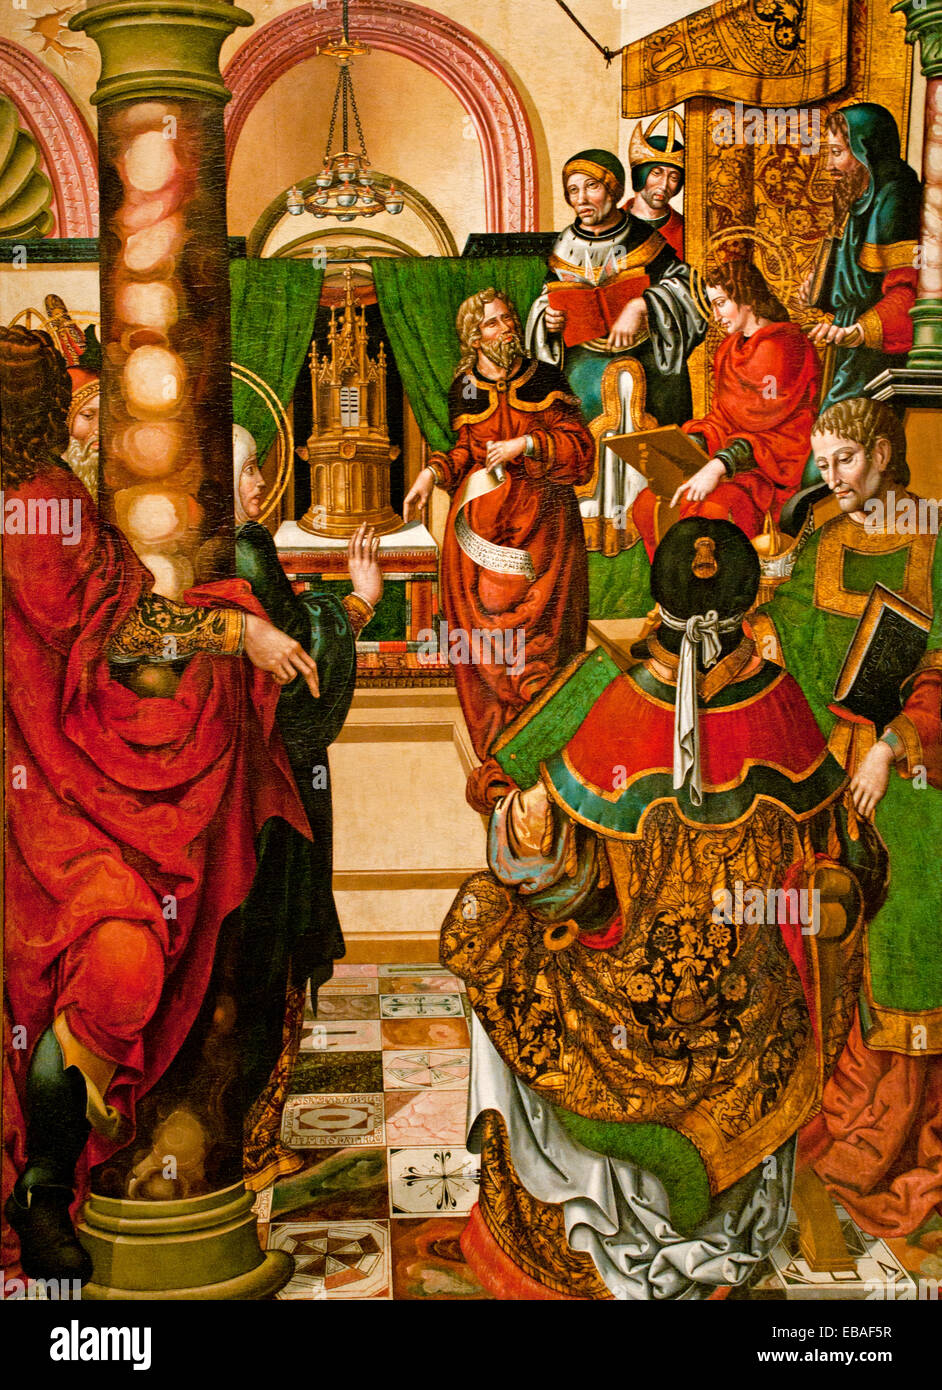 Gesù fra i dottori della legge 1515 Master di Sigena - Monastero di Santa María de Sigena (Villanueva de Sigena, Huesca) Spagna spagnolo Rinascimentale Barocco arte Foto Stock